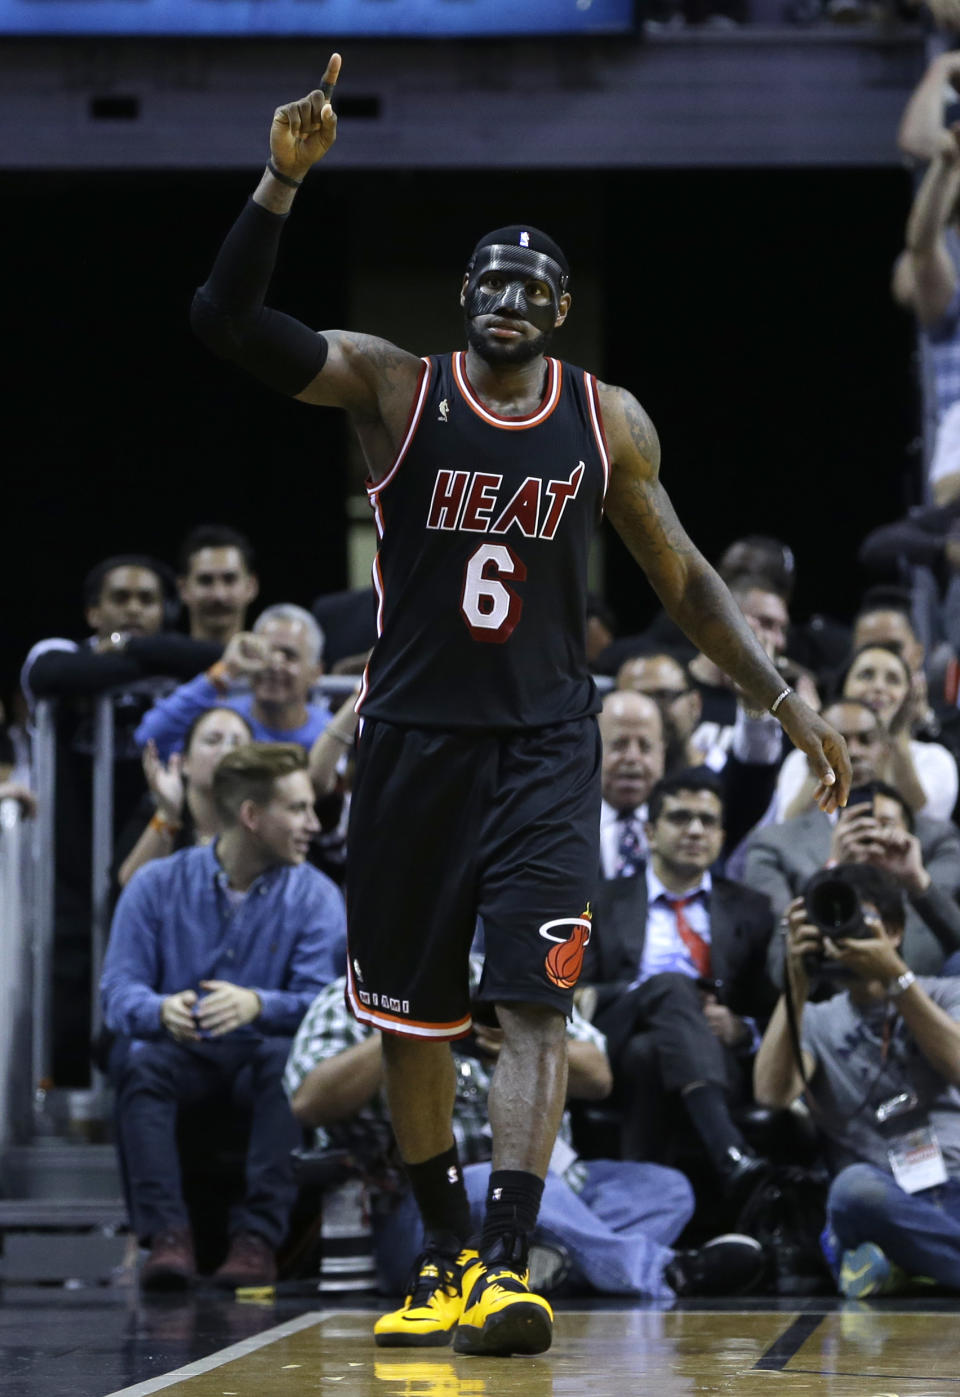 Miami Heat small forward LeBron James (6) celebrates after scoring against the New York Knicks during the second half of an NBA basketball game in Miami, Thursday, Feb. 27, 2014. Miami won 108-82. (AP Photo/Alan Diaz)